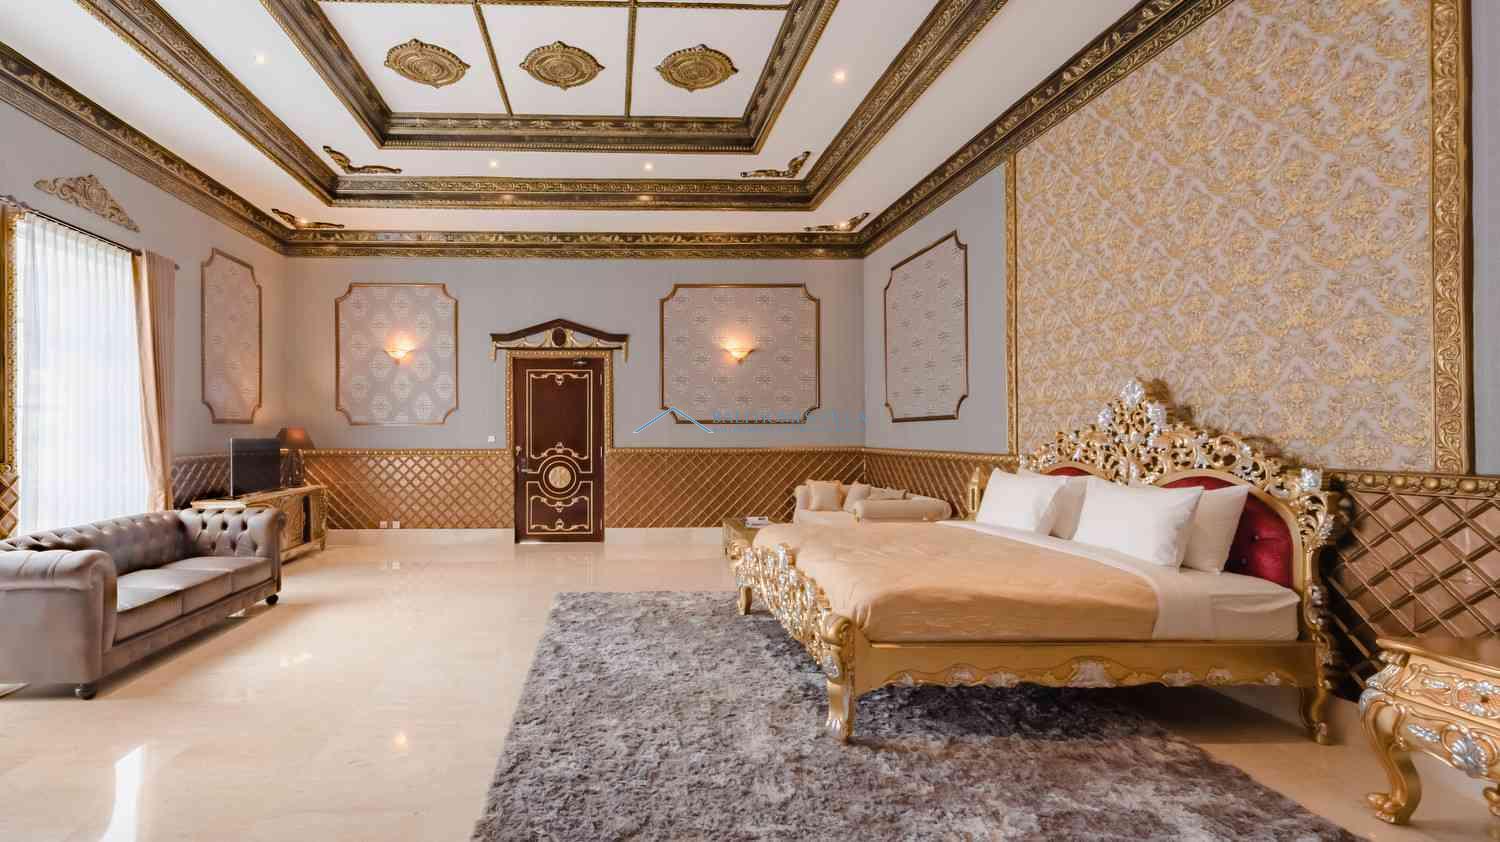 bedroom villa beachfront big land cheap price are classic architecture in Tabanan Bali for sale